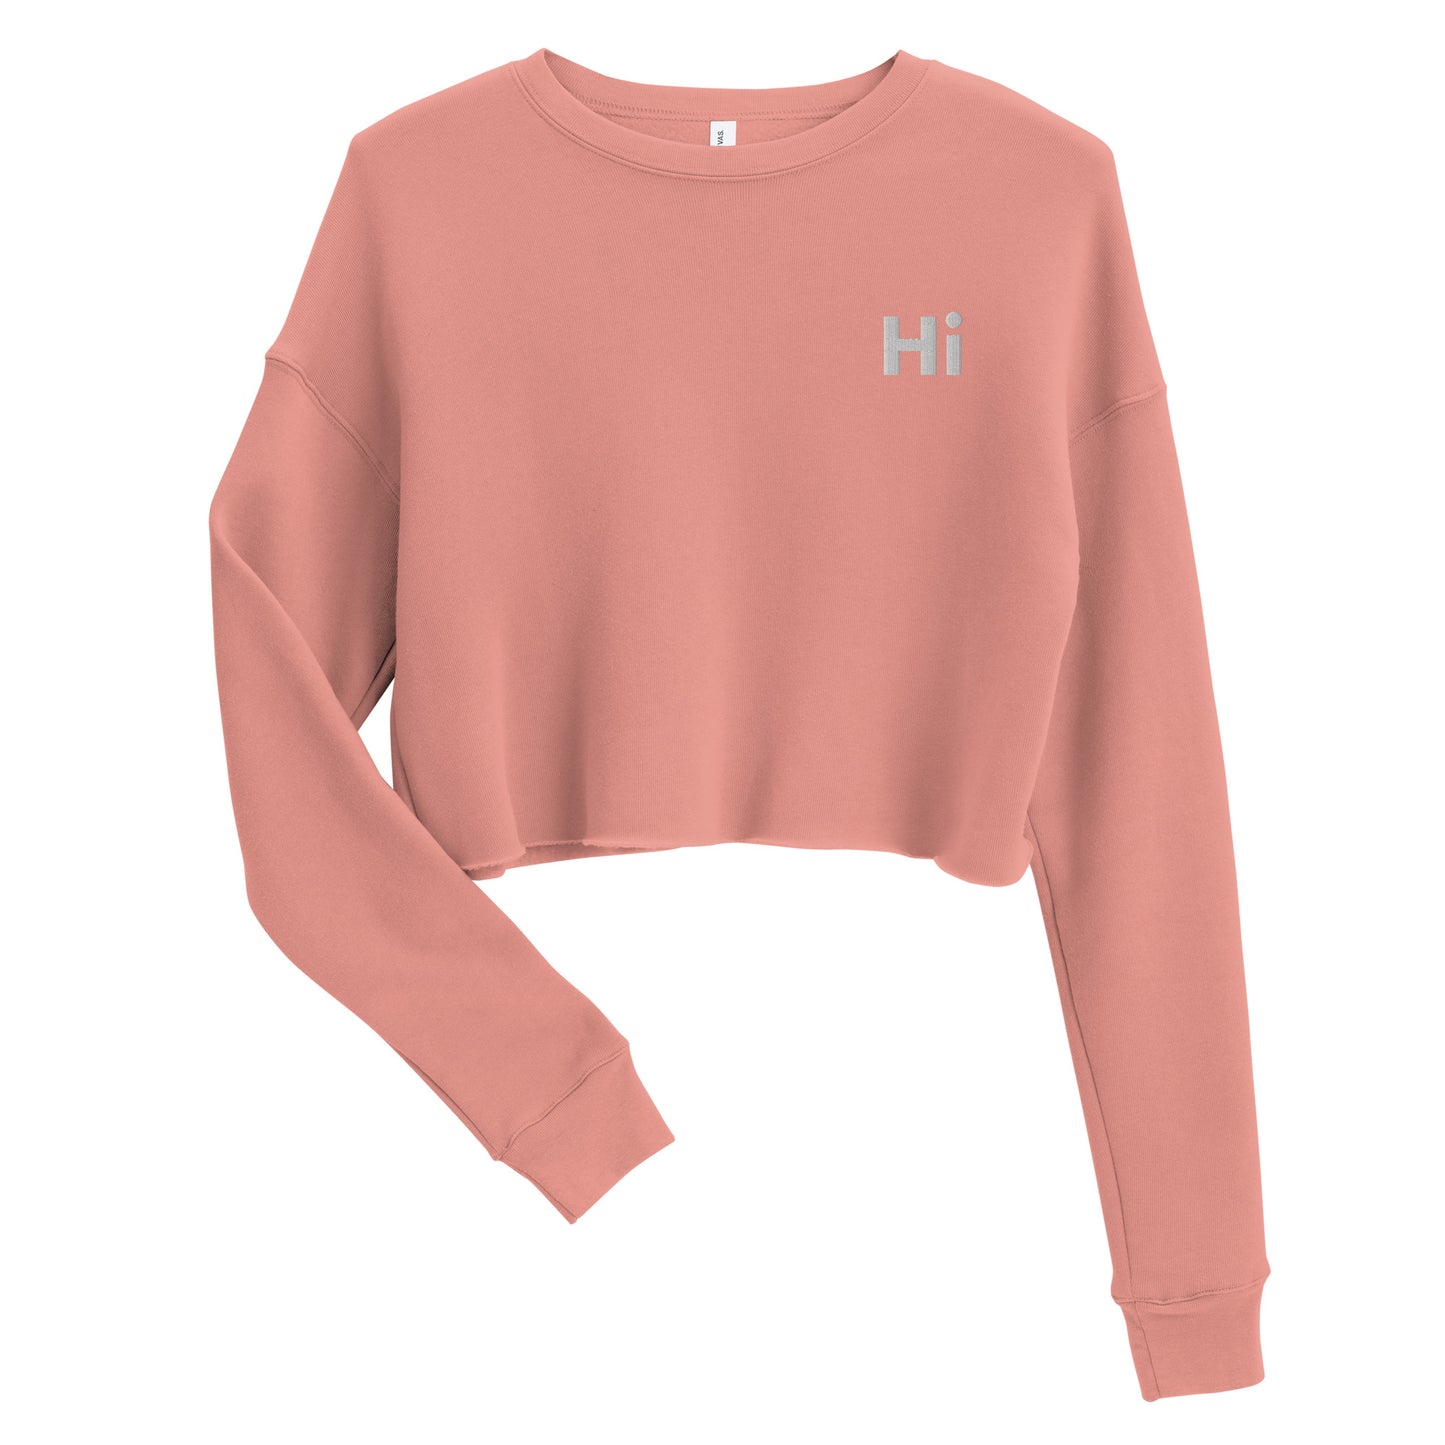 Hi Cropped Sweatshirt